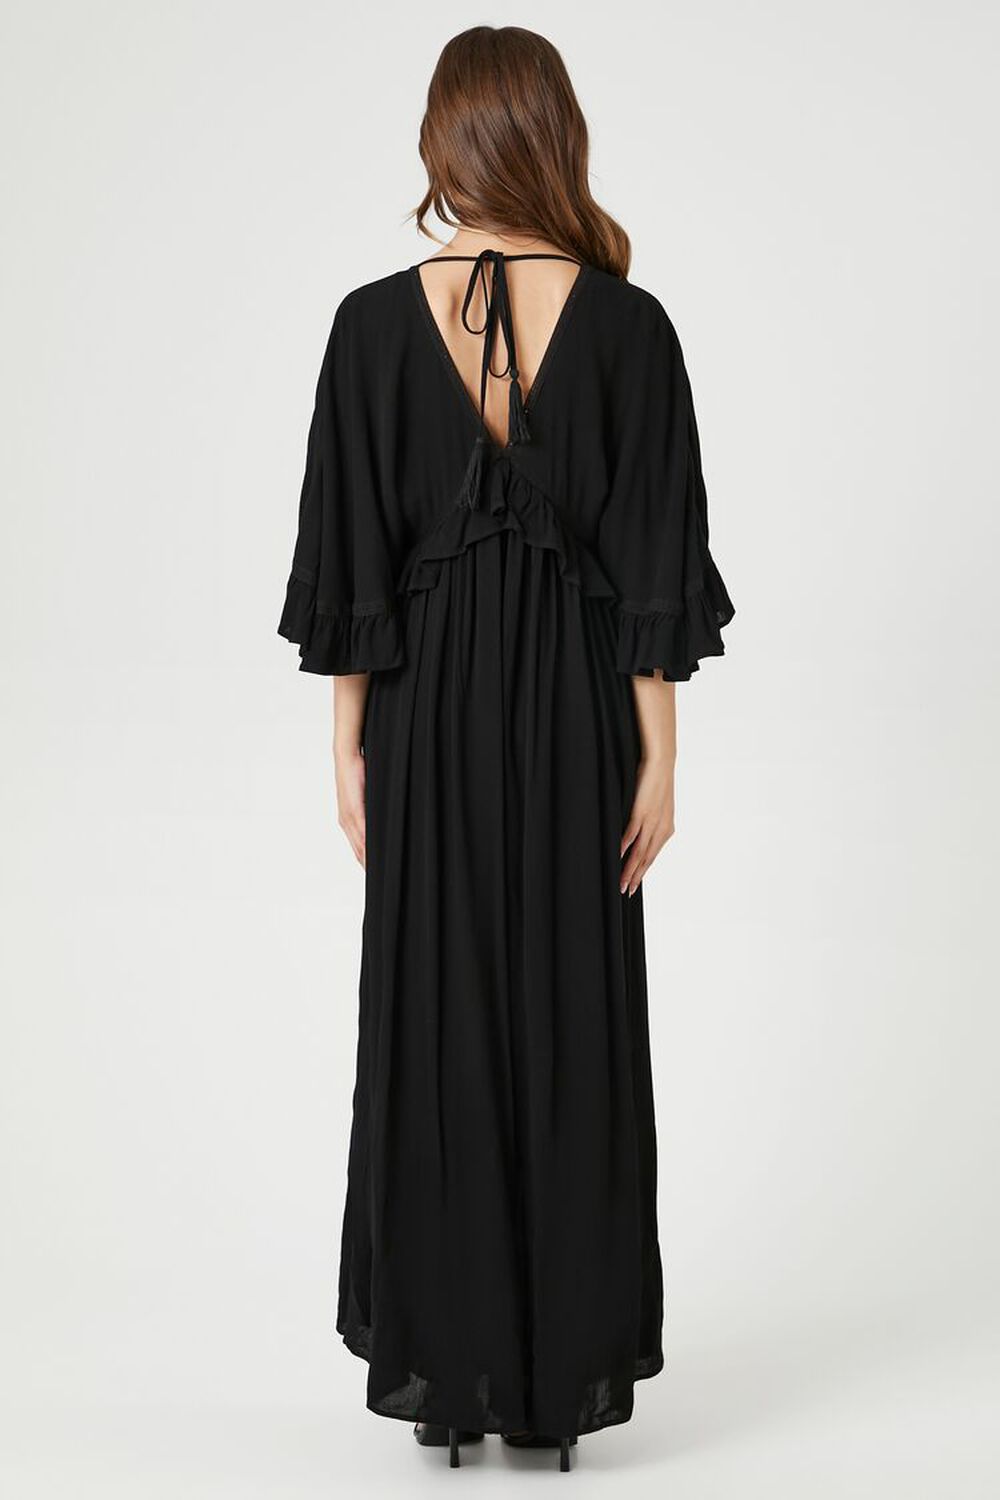 BLACK Butterfly-Sleeve Flounce Maxi Dress, image 3